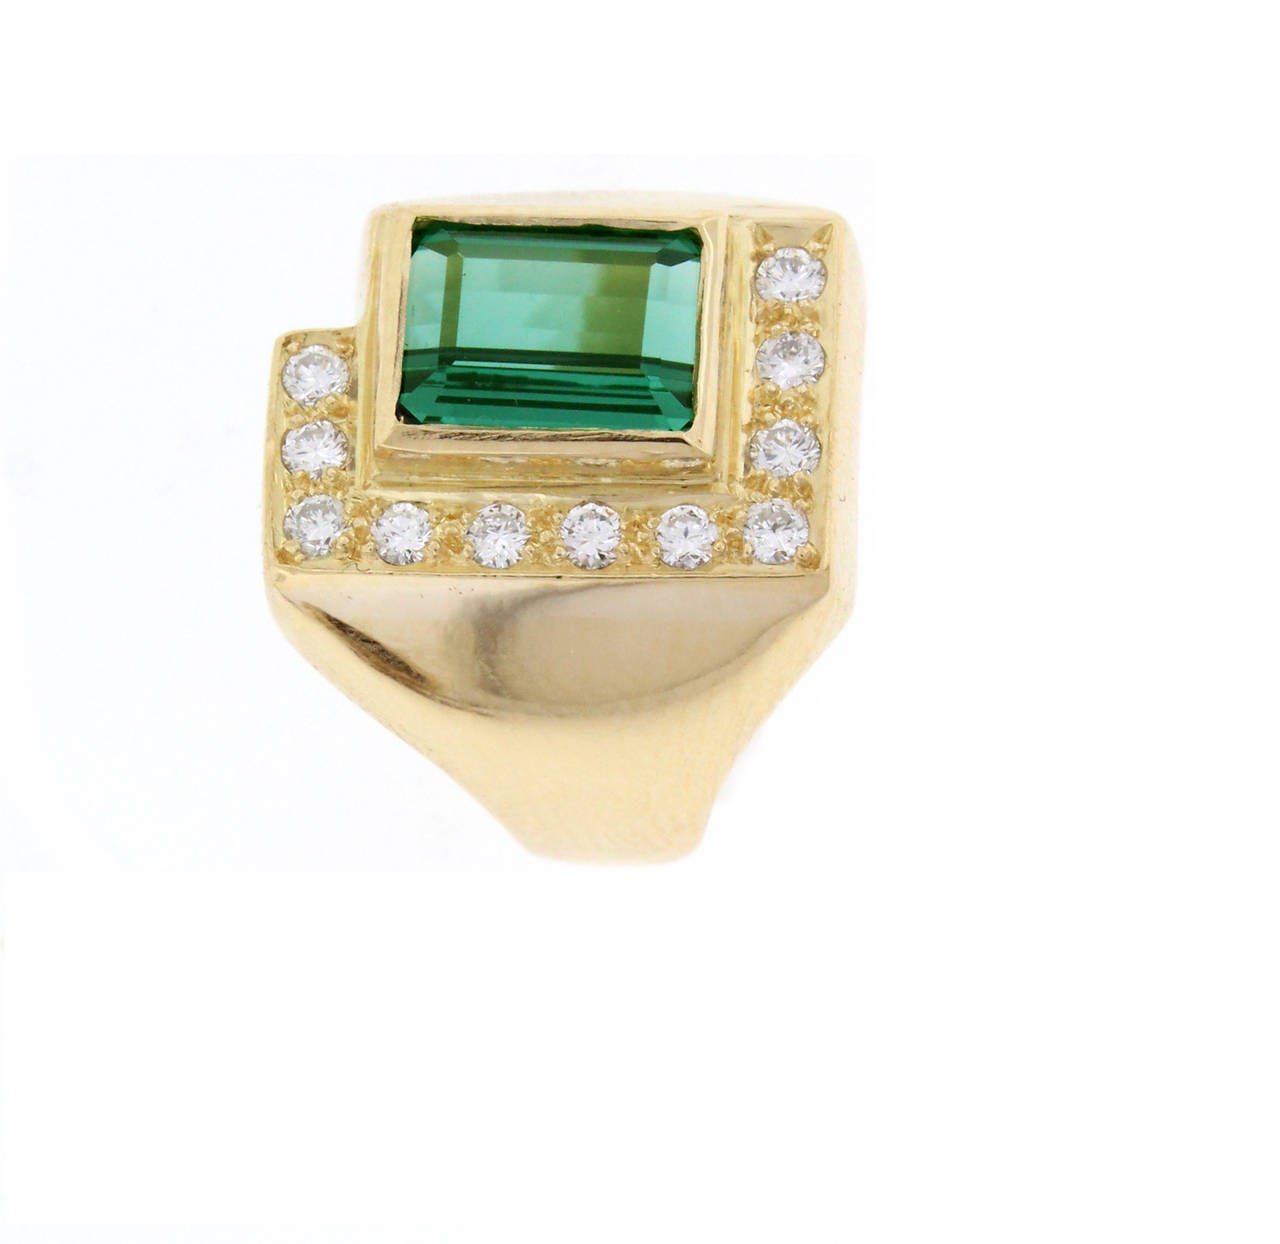 Green Tourmaline and diamond 18 karat gold ring by Brazilian jeweler Haroldo Burle-Marx. The Tourmaline weighs 2.23 and the 11 diamonds weigh .33 carats.

Dazzled by Nature, Haroldo Burle Marx designs jewels of timeless artistry usings of